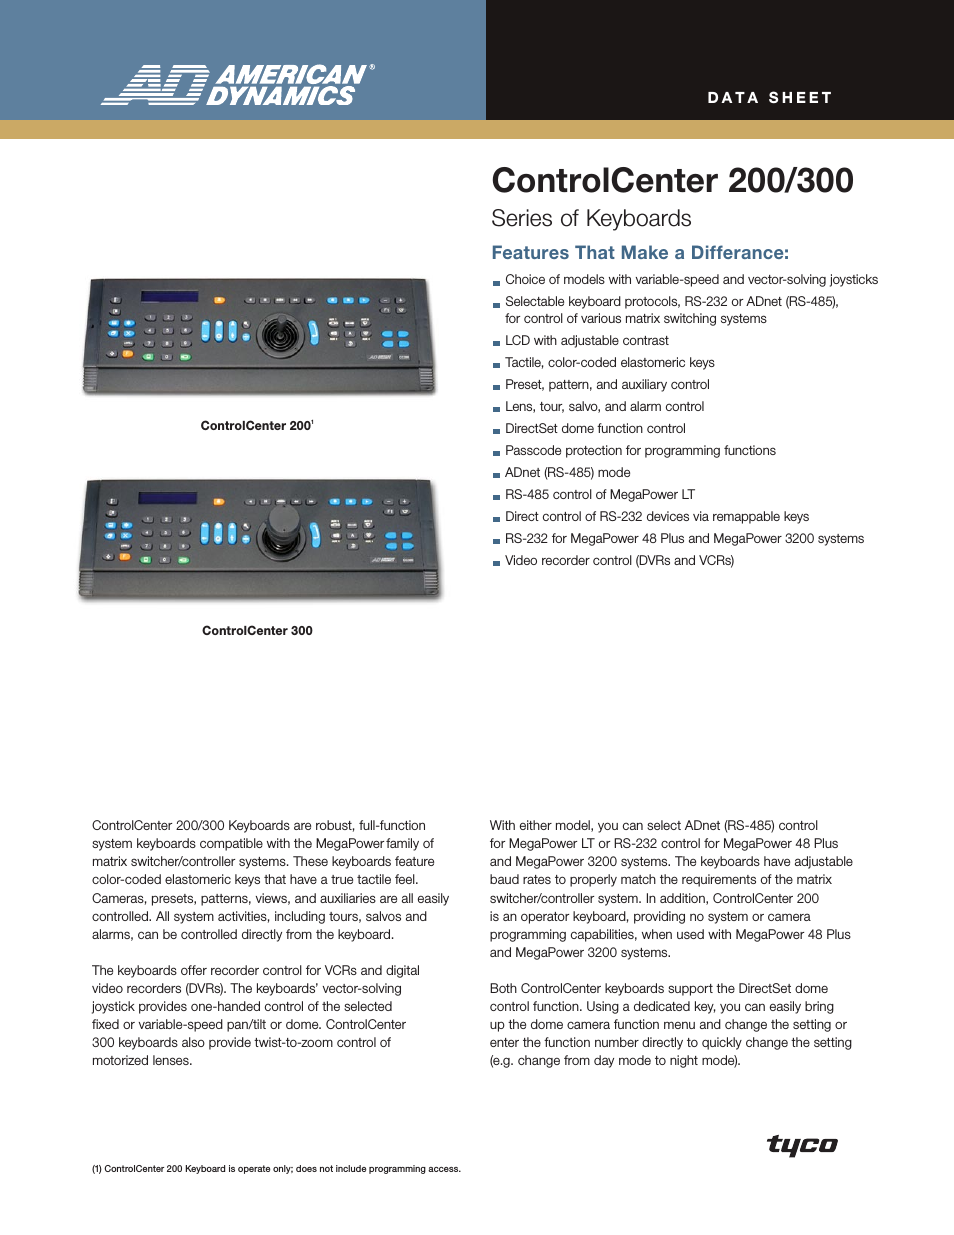 ControlCenter 200/300 Series